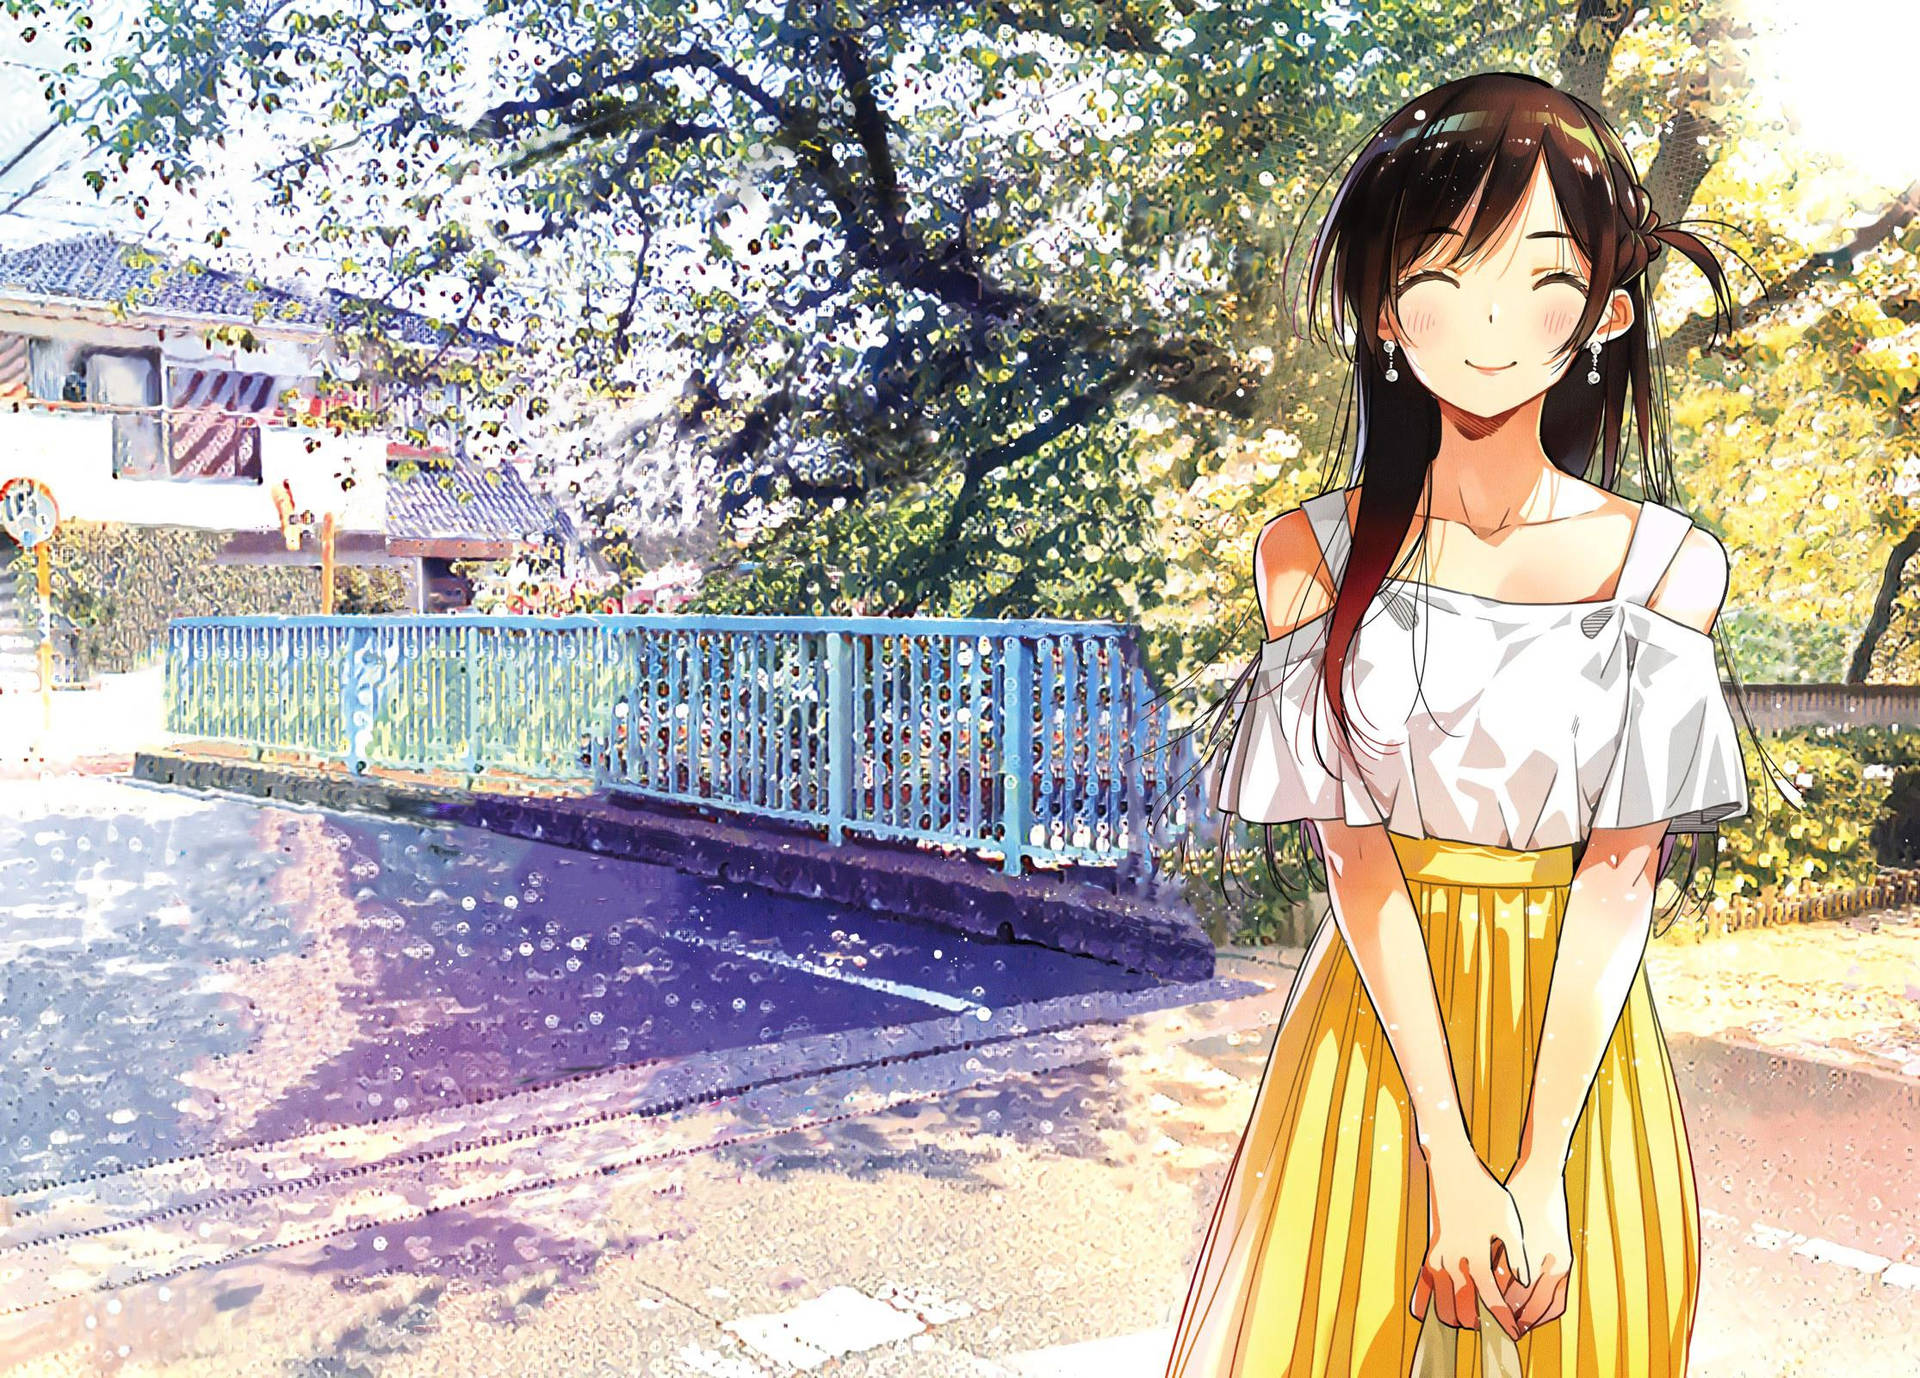 Rent A Girlfriend Chizuru Spring Date Wallpaper